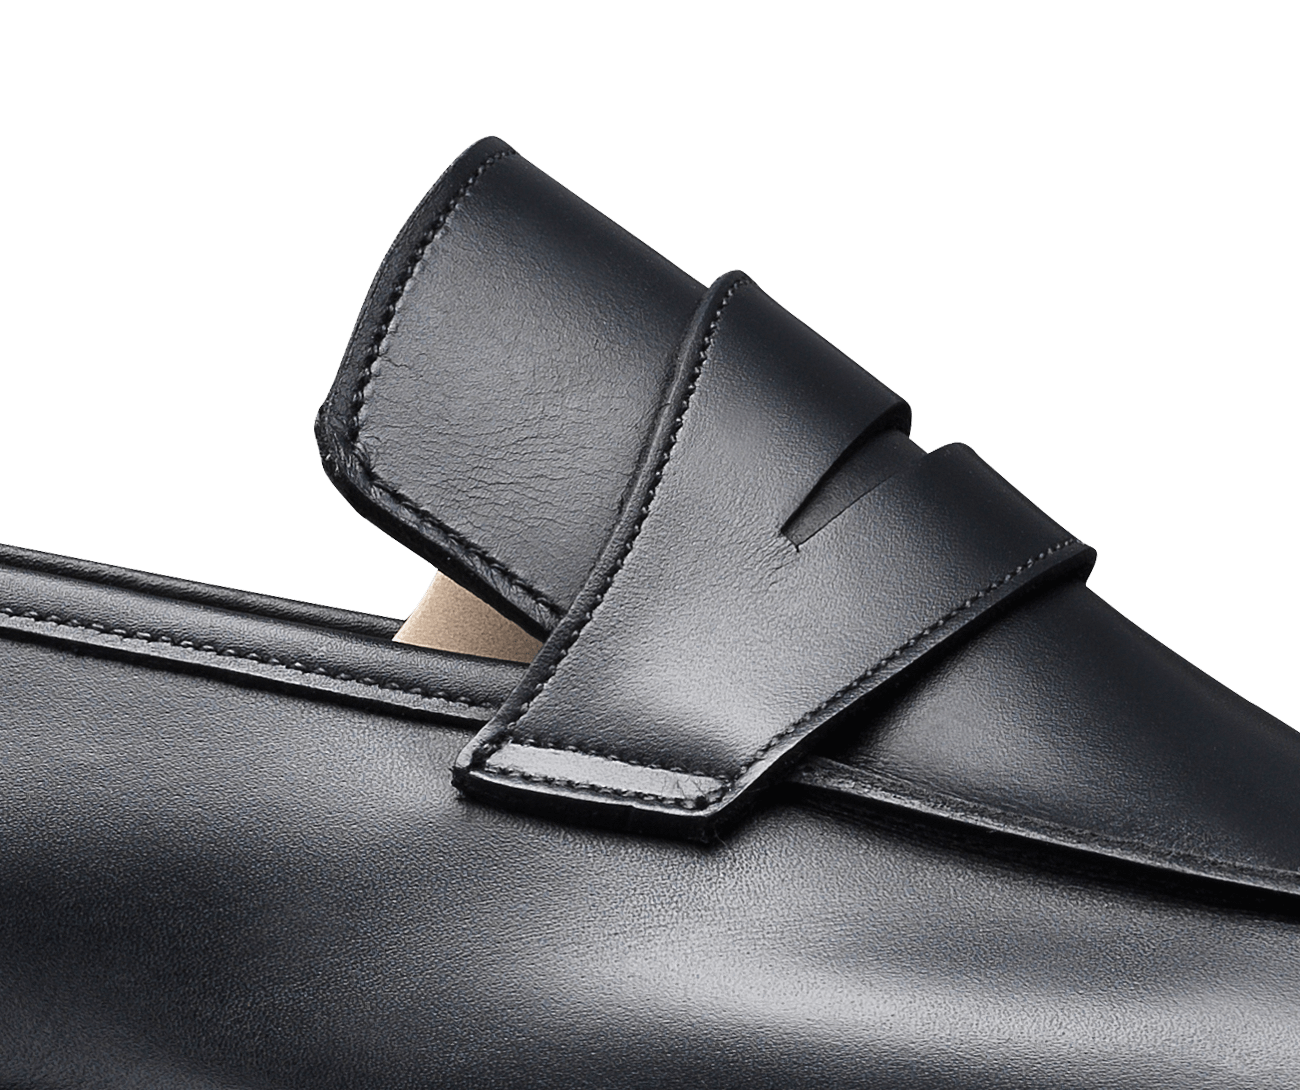 Box Calf: Aniline Semi-Rigid Calfskin Leather